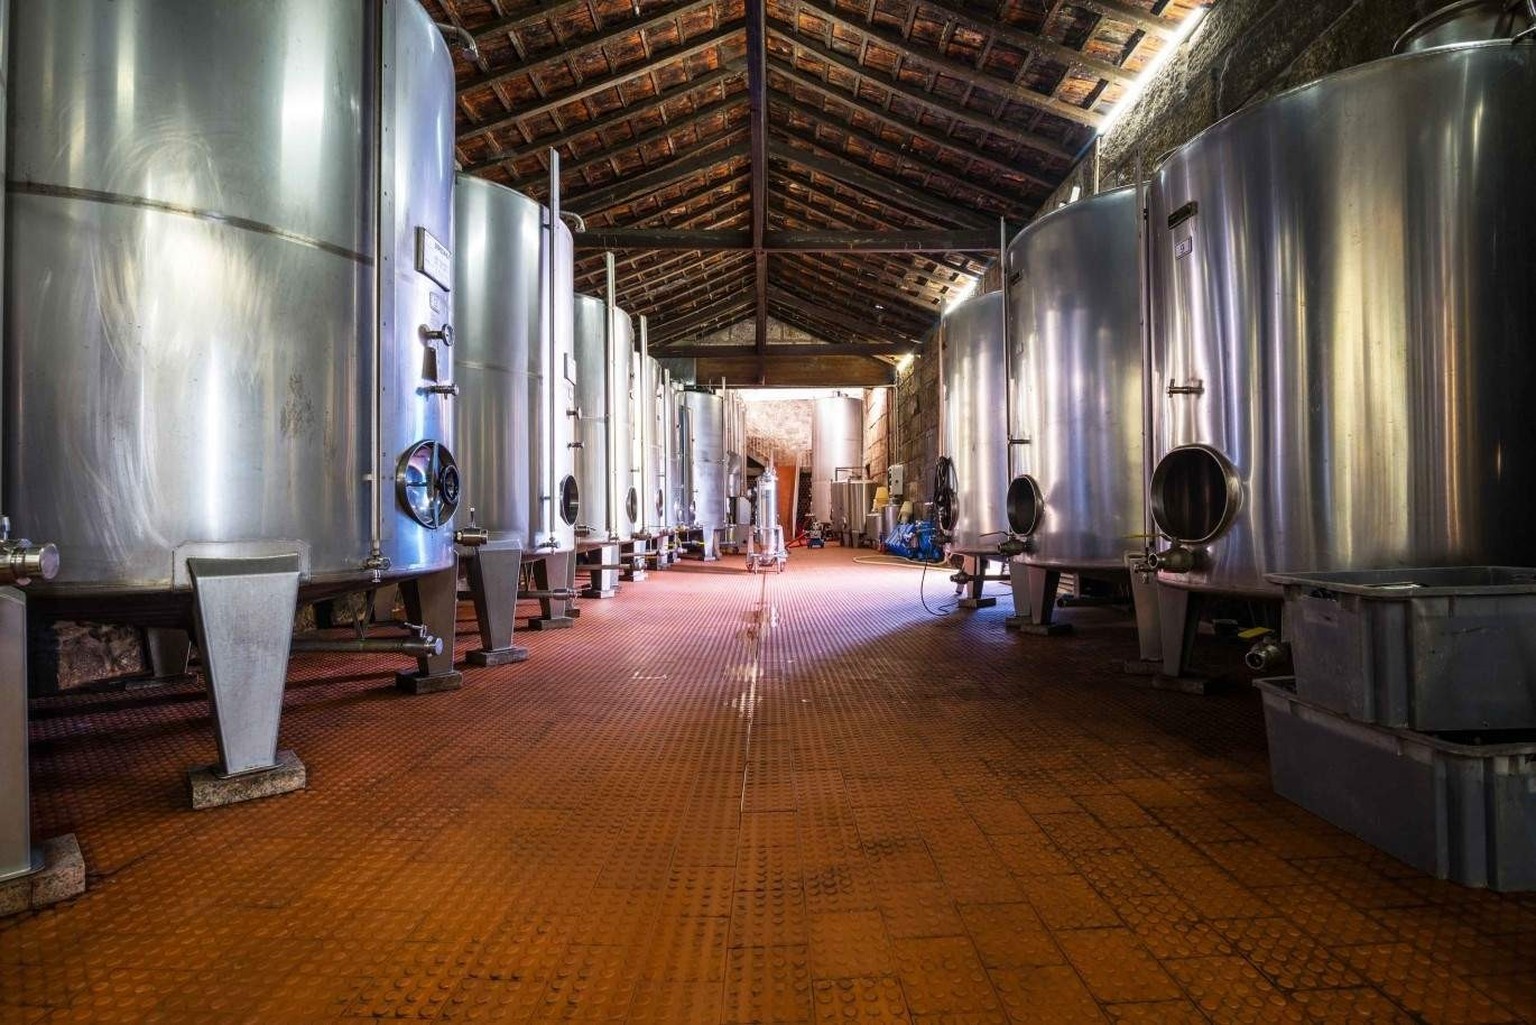 https://castleist.com/7-5m-santo-emiliao-portugal-beautiful-palace-vineyard/
schloss und weinberg zu verkaufen